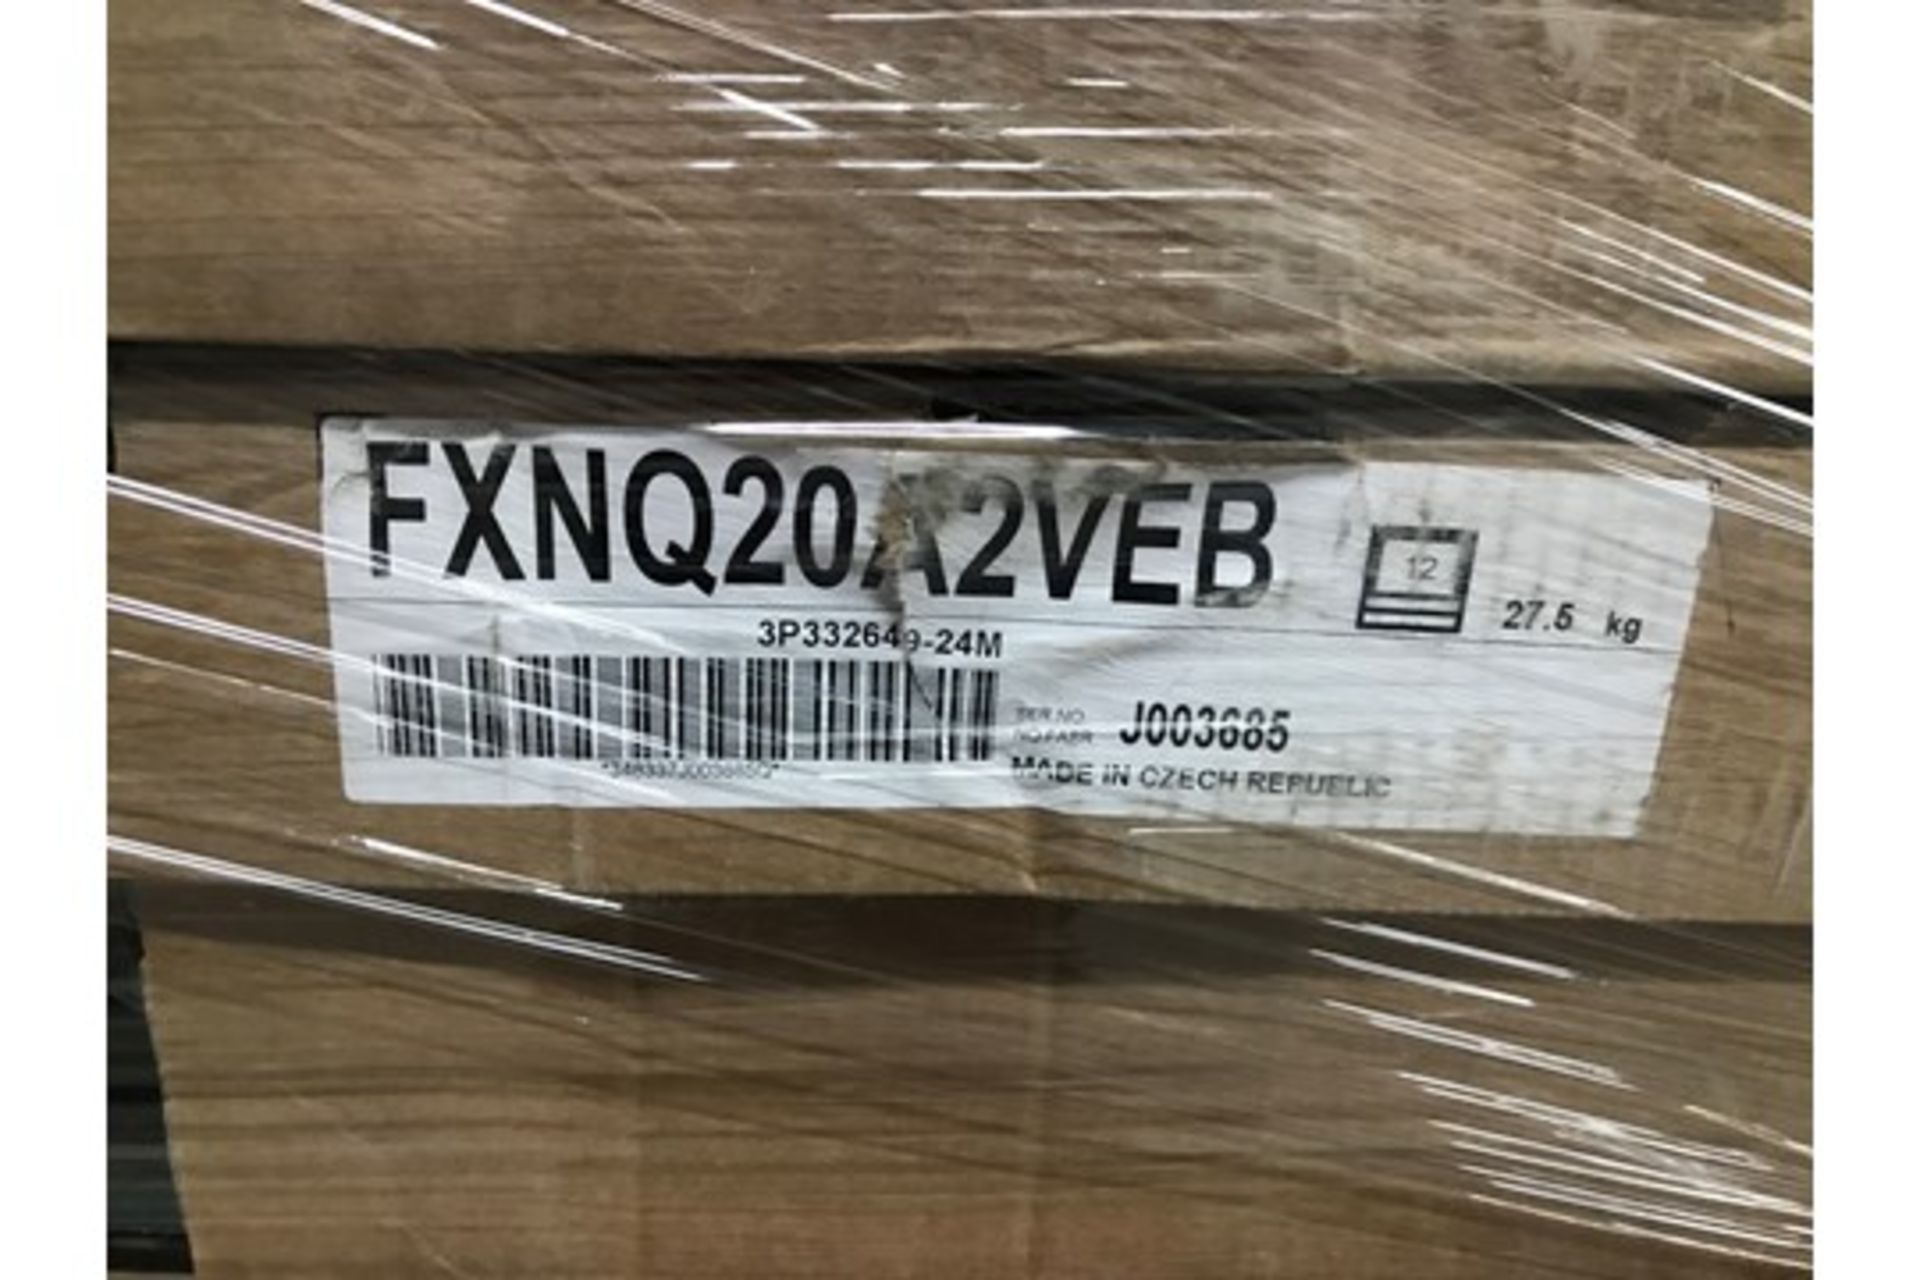 Daikin FXNQ20A2VEB VRV Indoor Air Conditioning Cassette Unit - Image 4 of 4